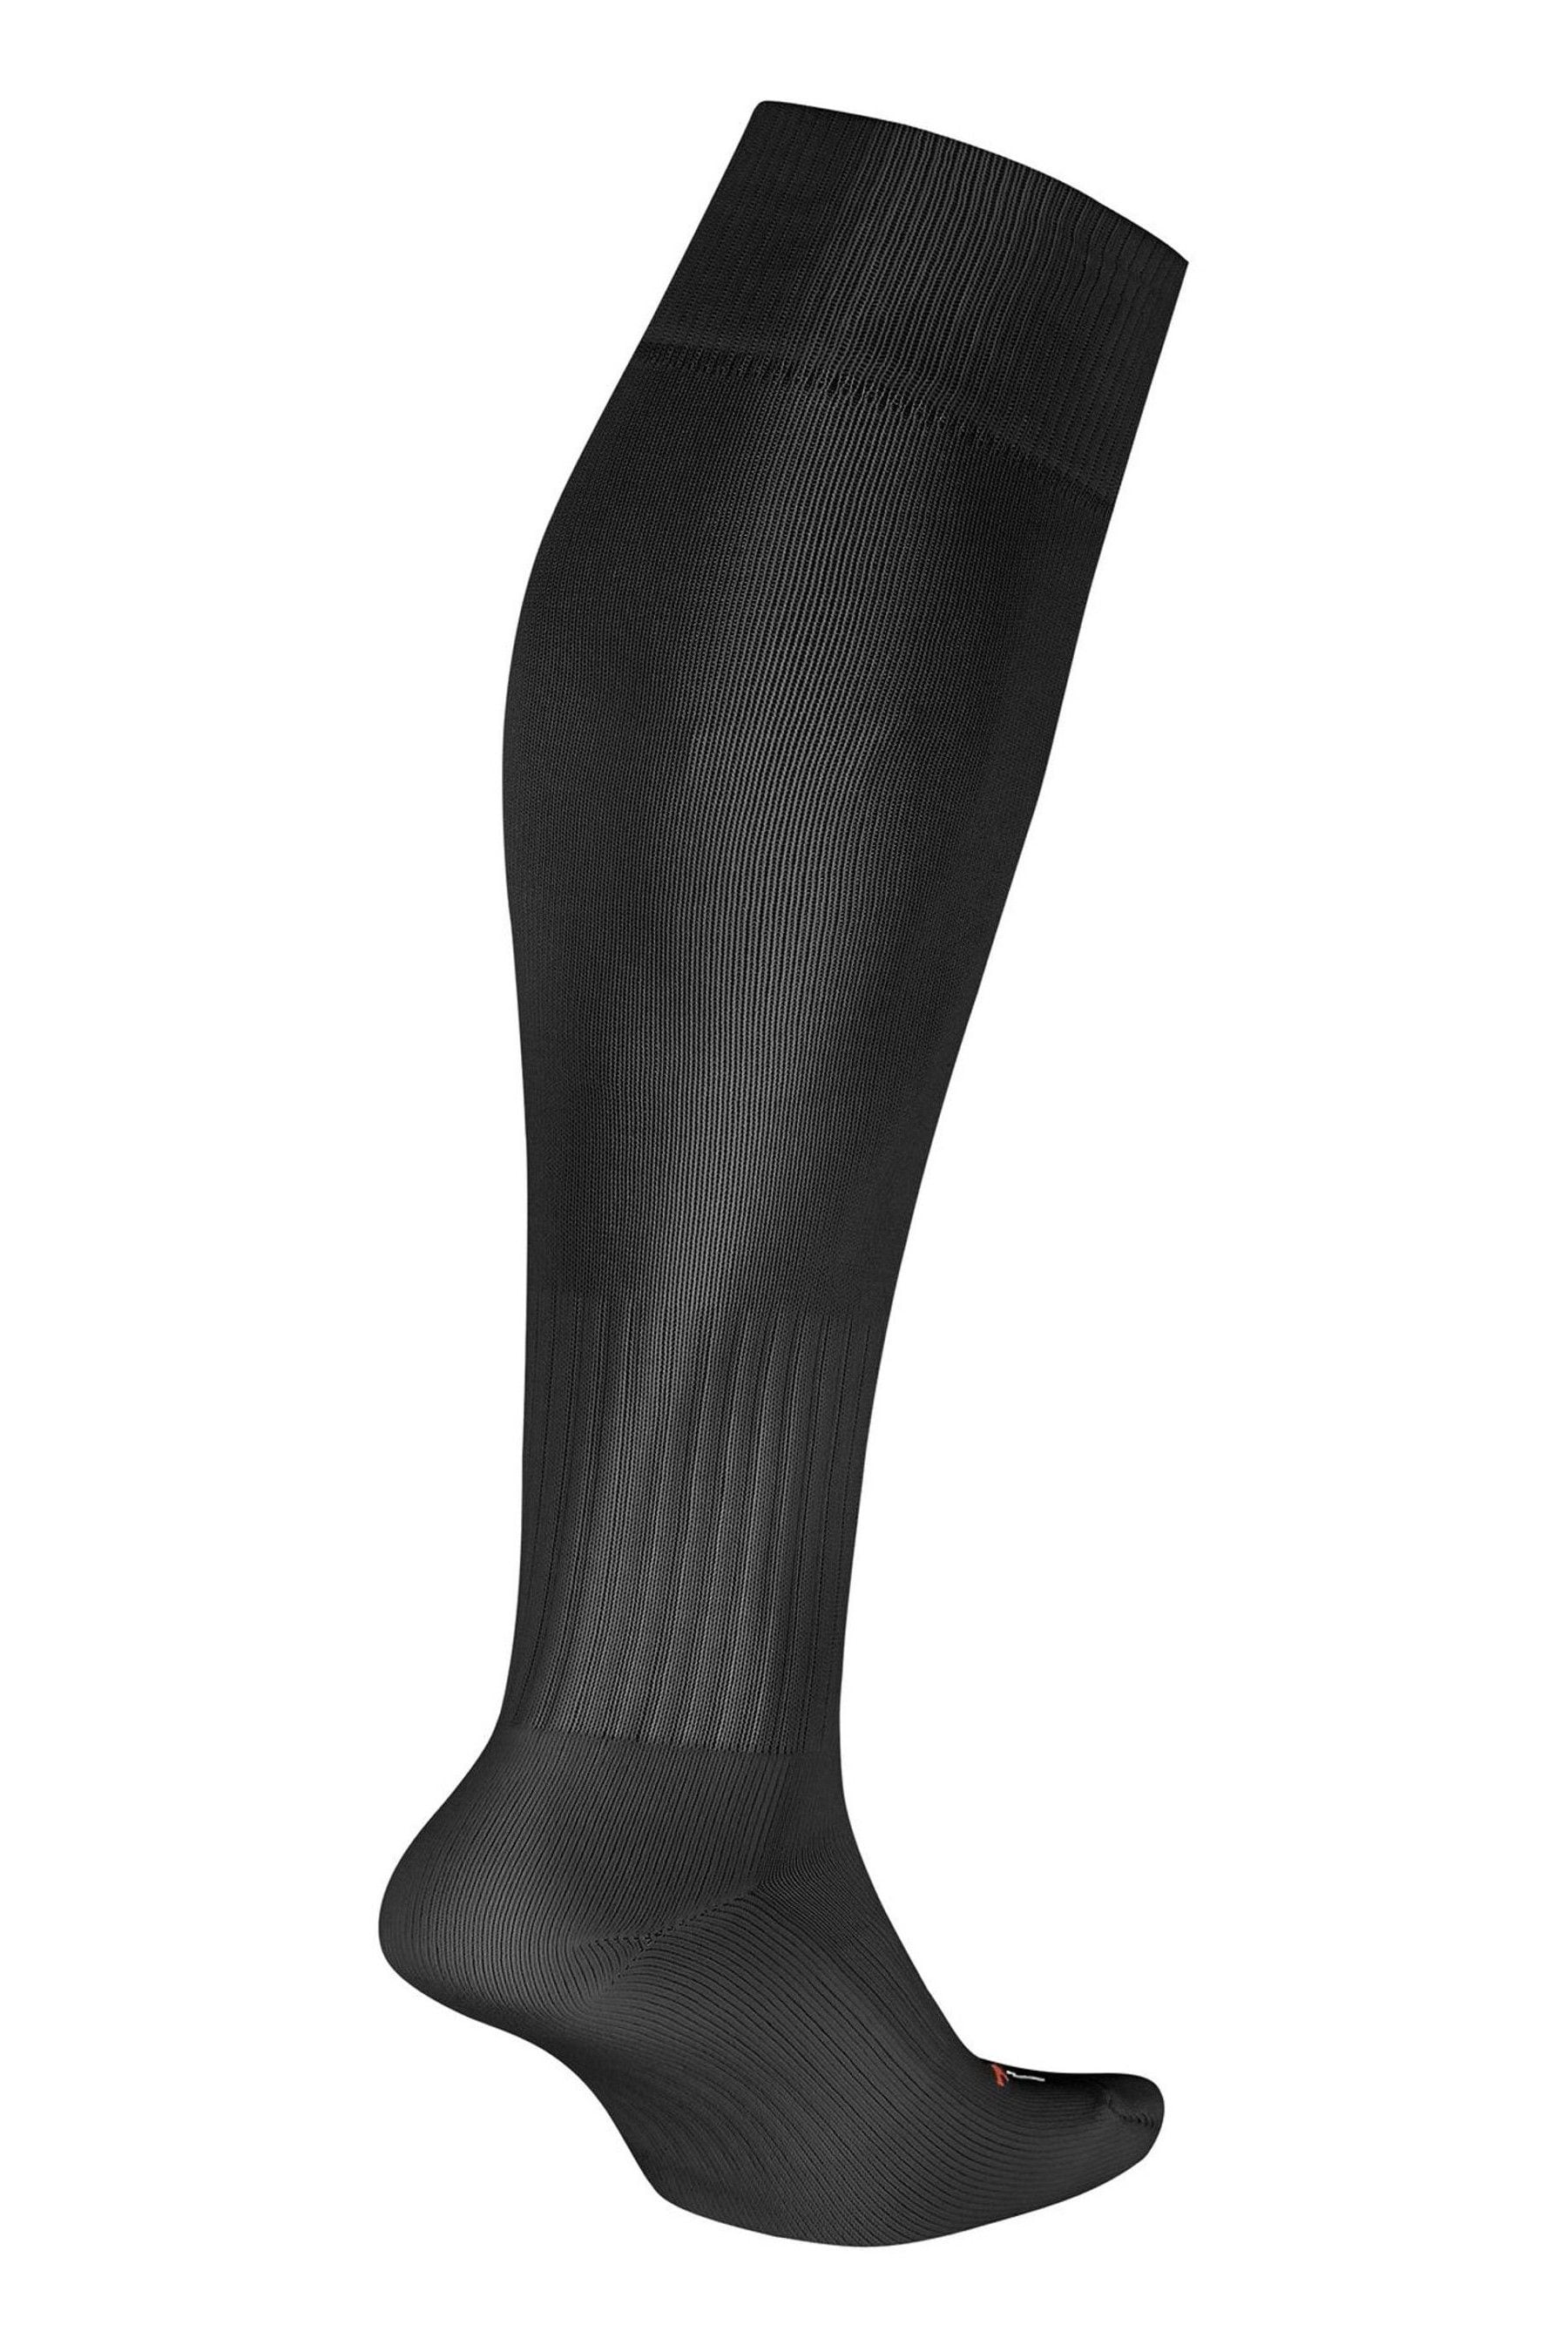 Buy Nike Black Classic Knee High Football Socks from the Next UK online ...